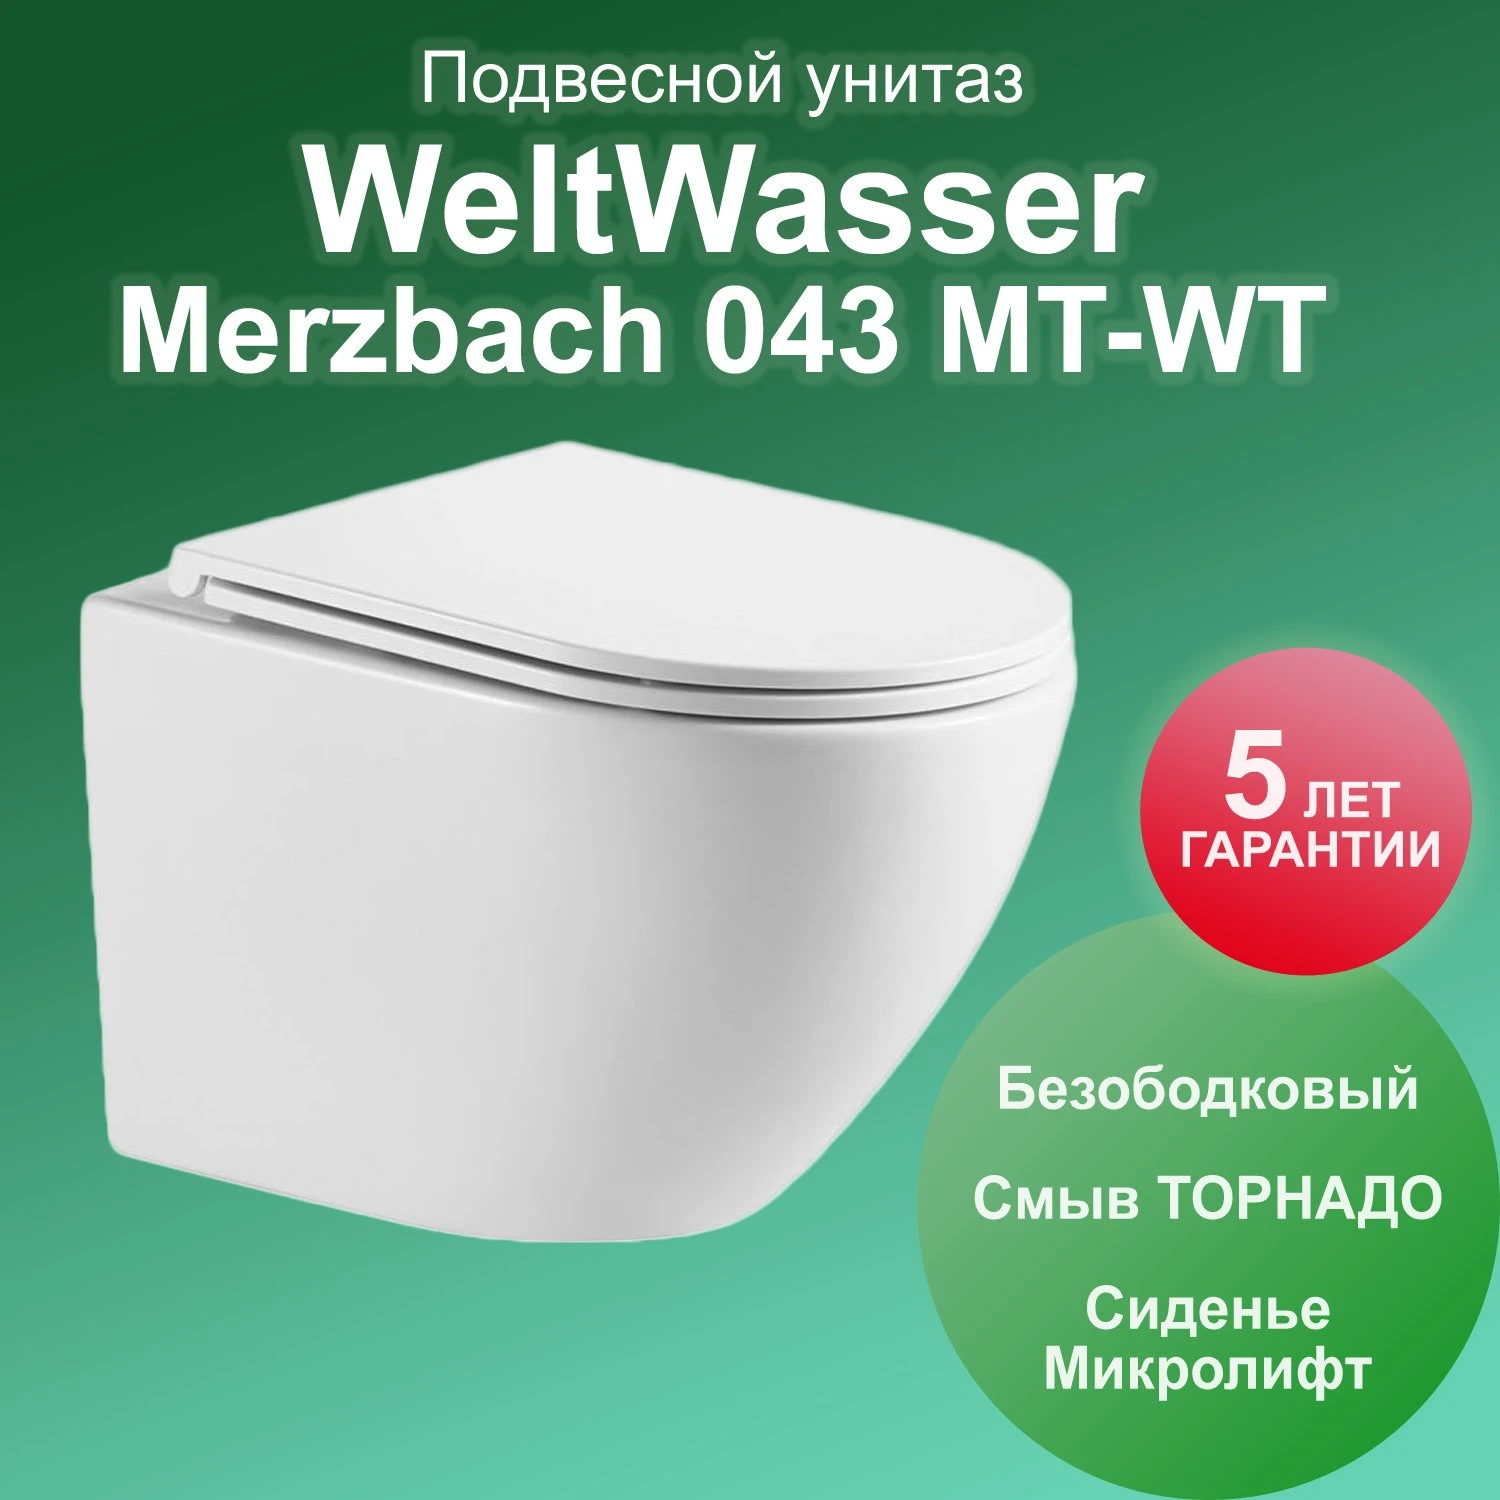 Комплект Weltwasser 10000011405 унитаза Merzbach 043 MT-WT с сиденьем микролифт и инсталляции Amberg 350 ST с черной кнопкой Amberg RD-BL - фото 1